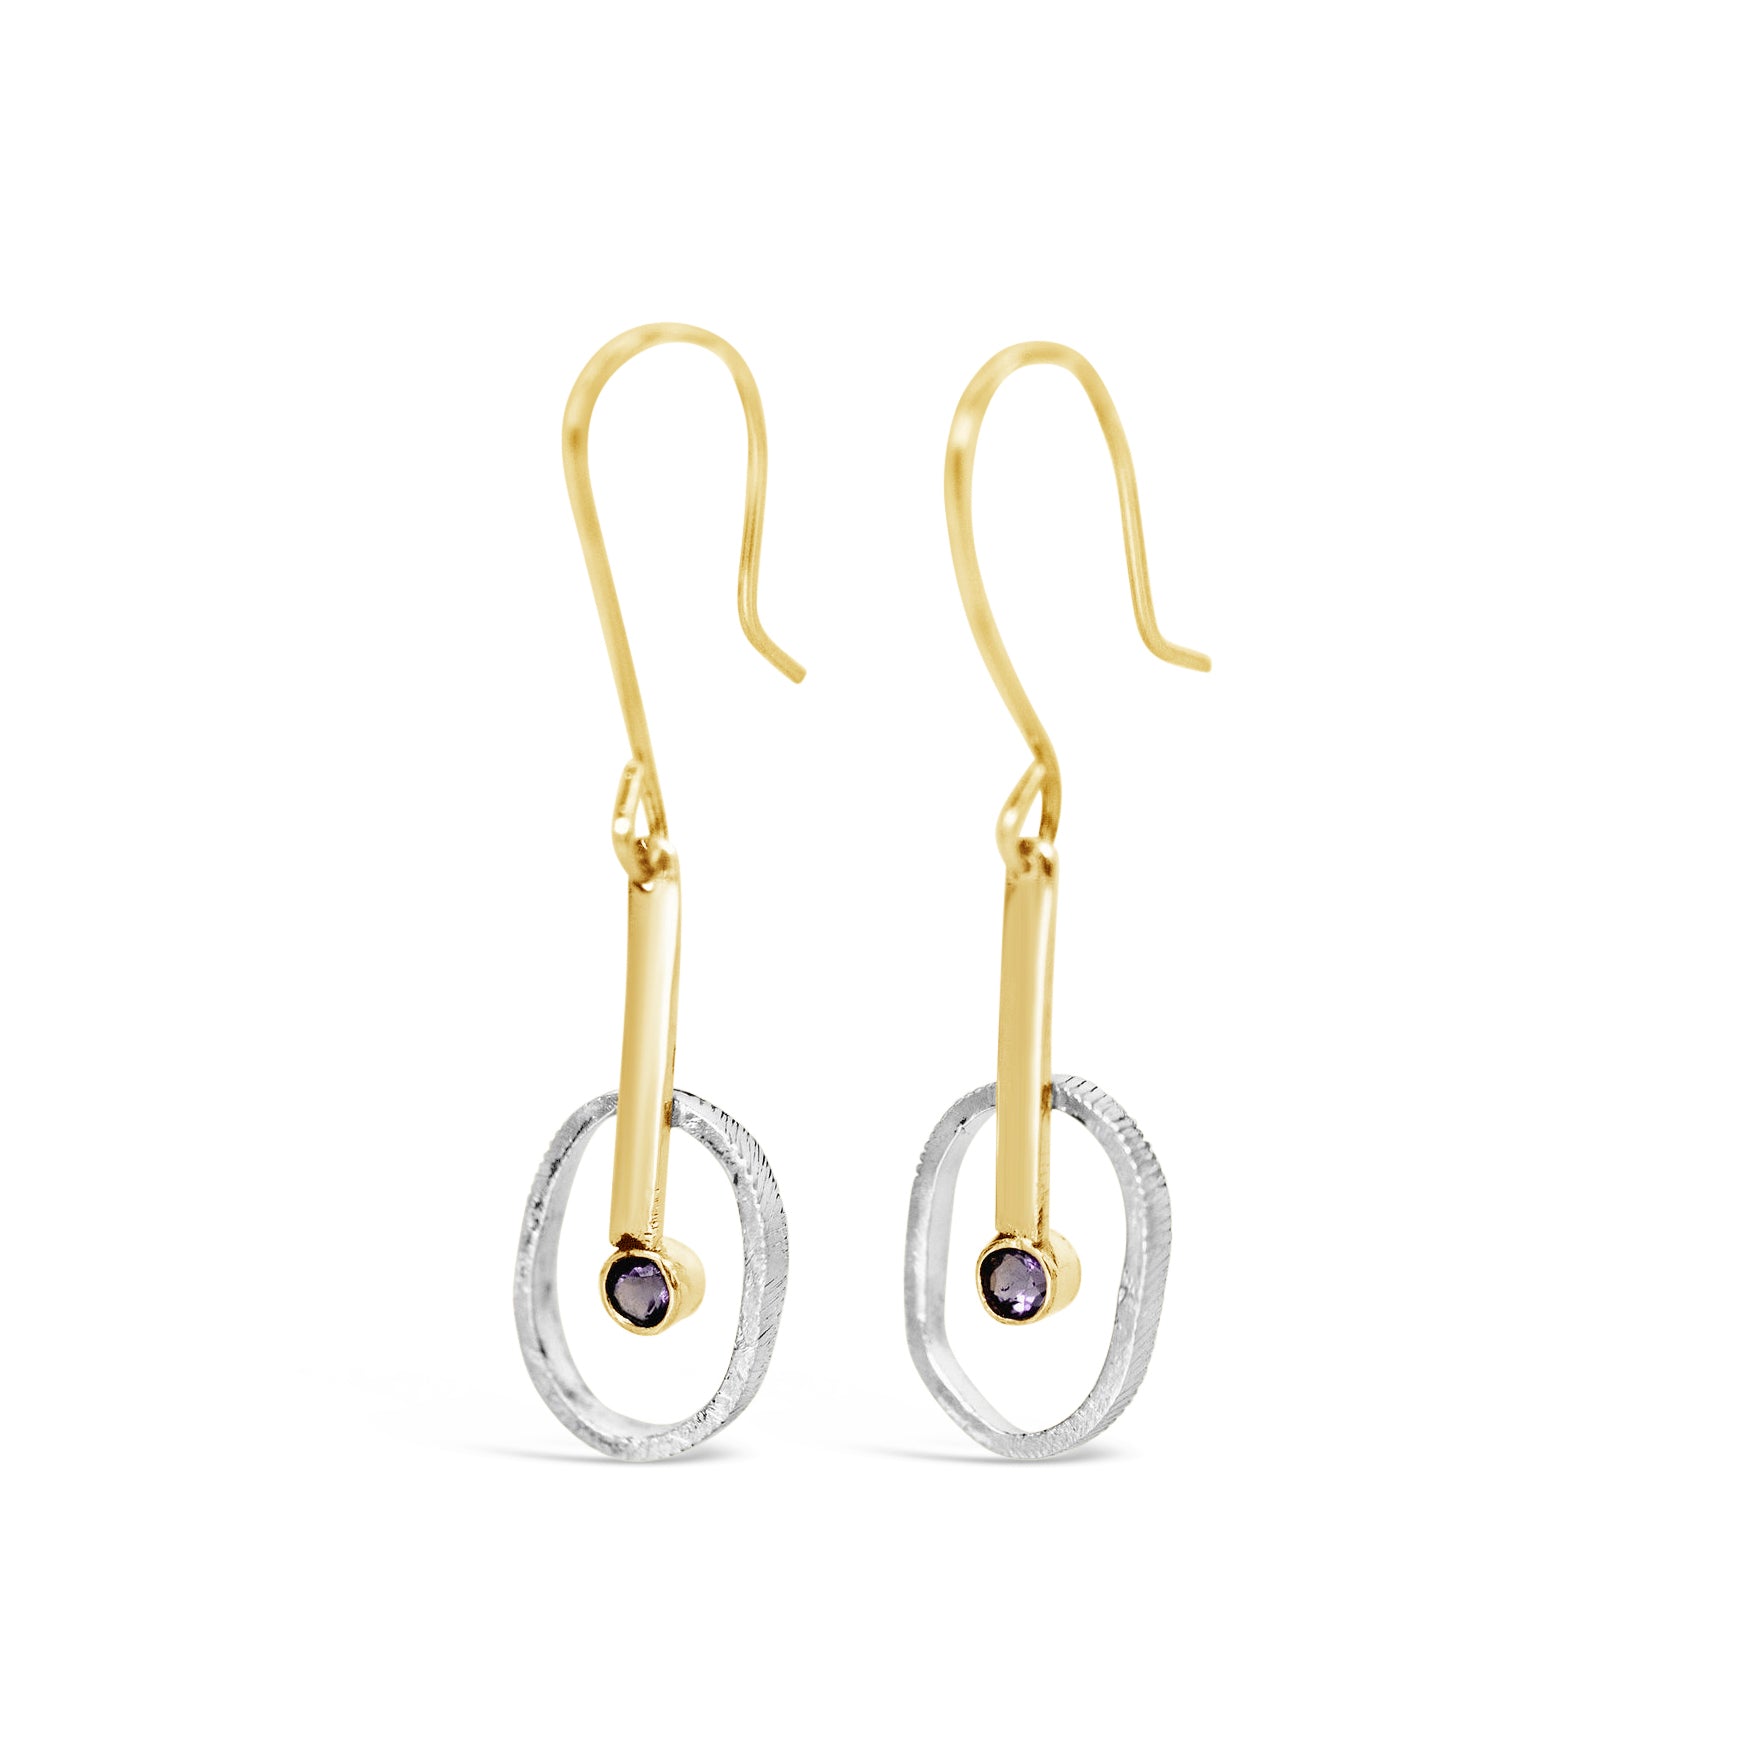 Vera - 14K & Sterling Silver Dangle Earrings with Iolite